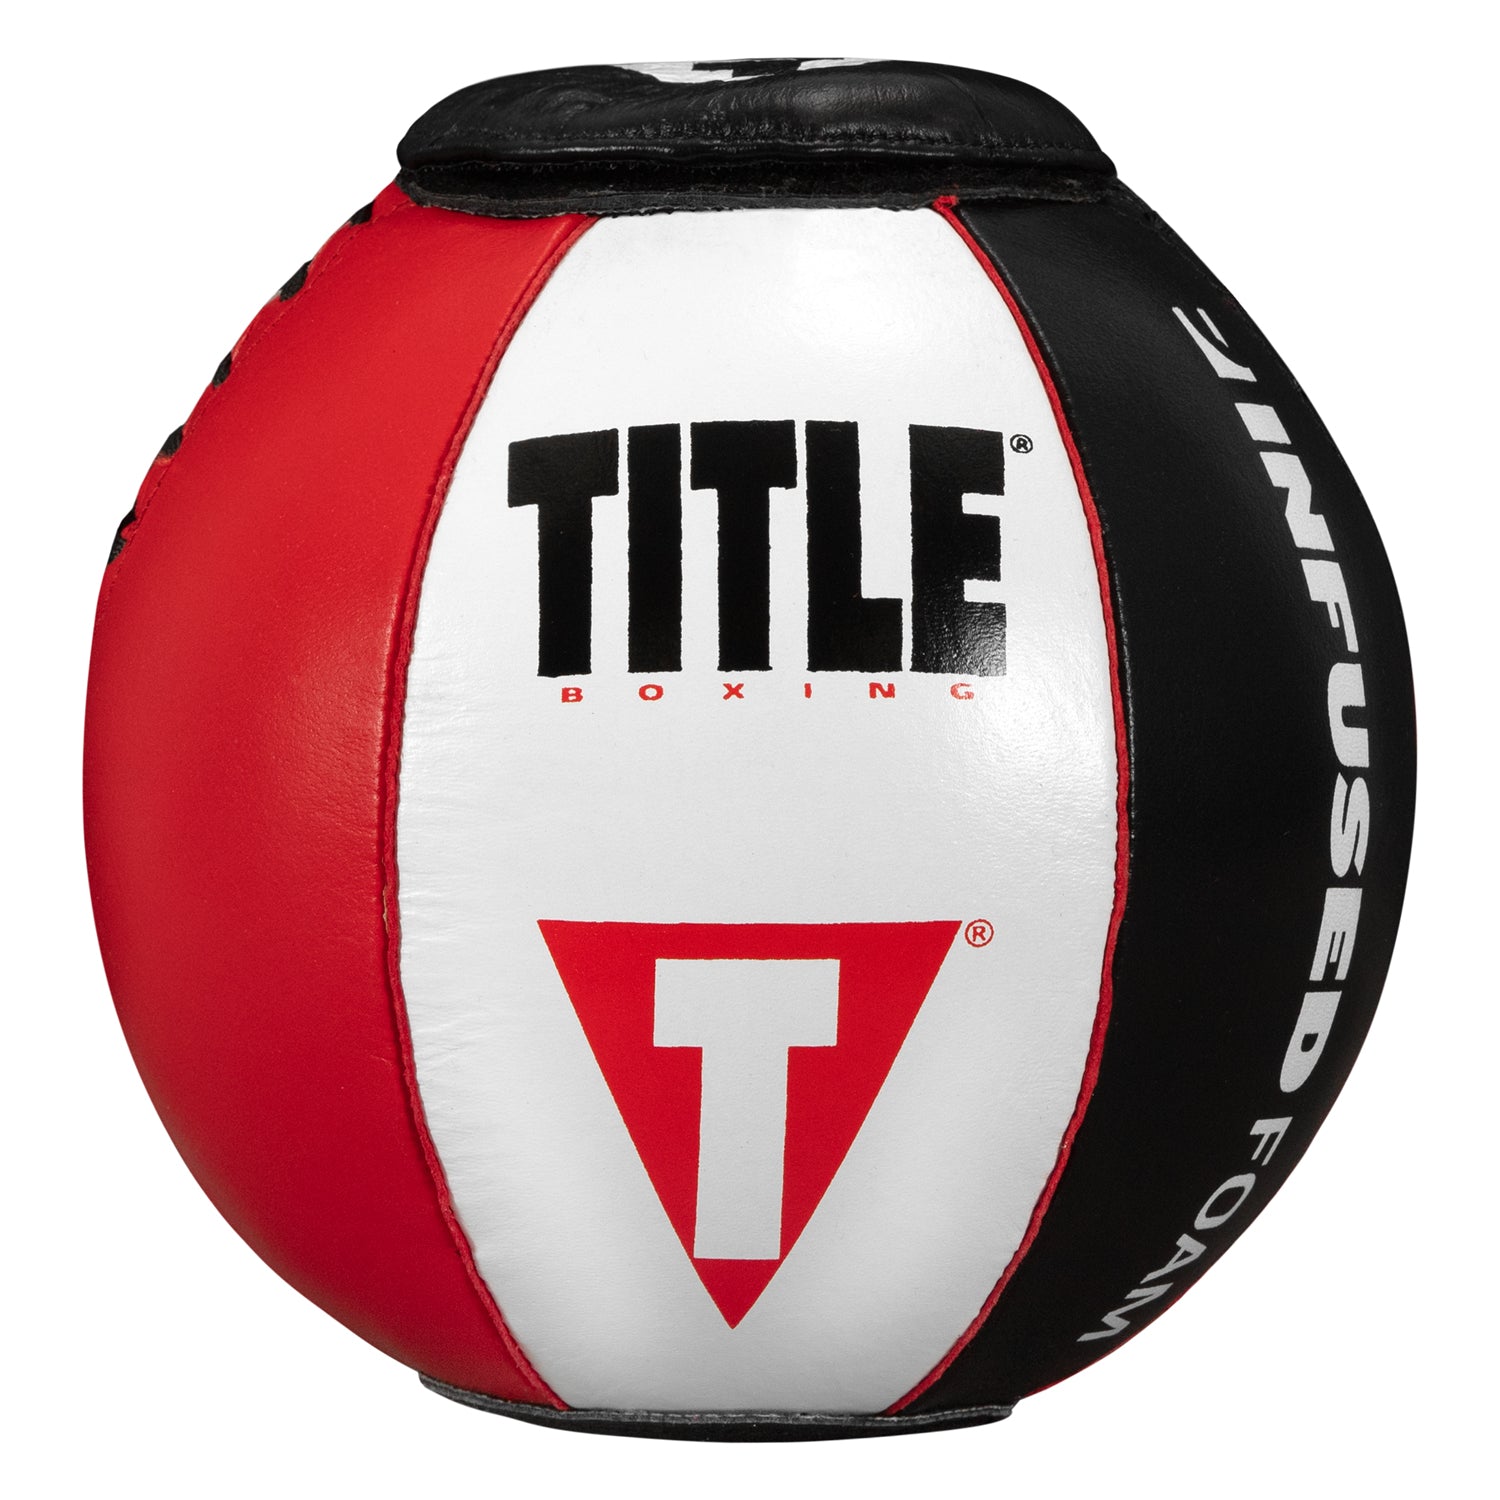 Pro Cobra Reflex Bag Replacement Ball/Bag for Champs MMA Cobra Reflex Bag